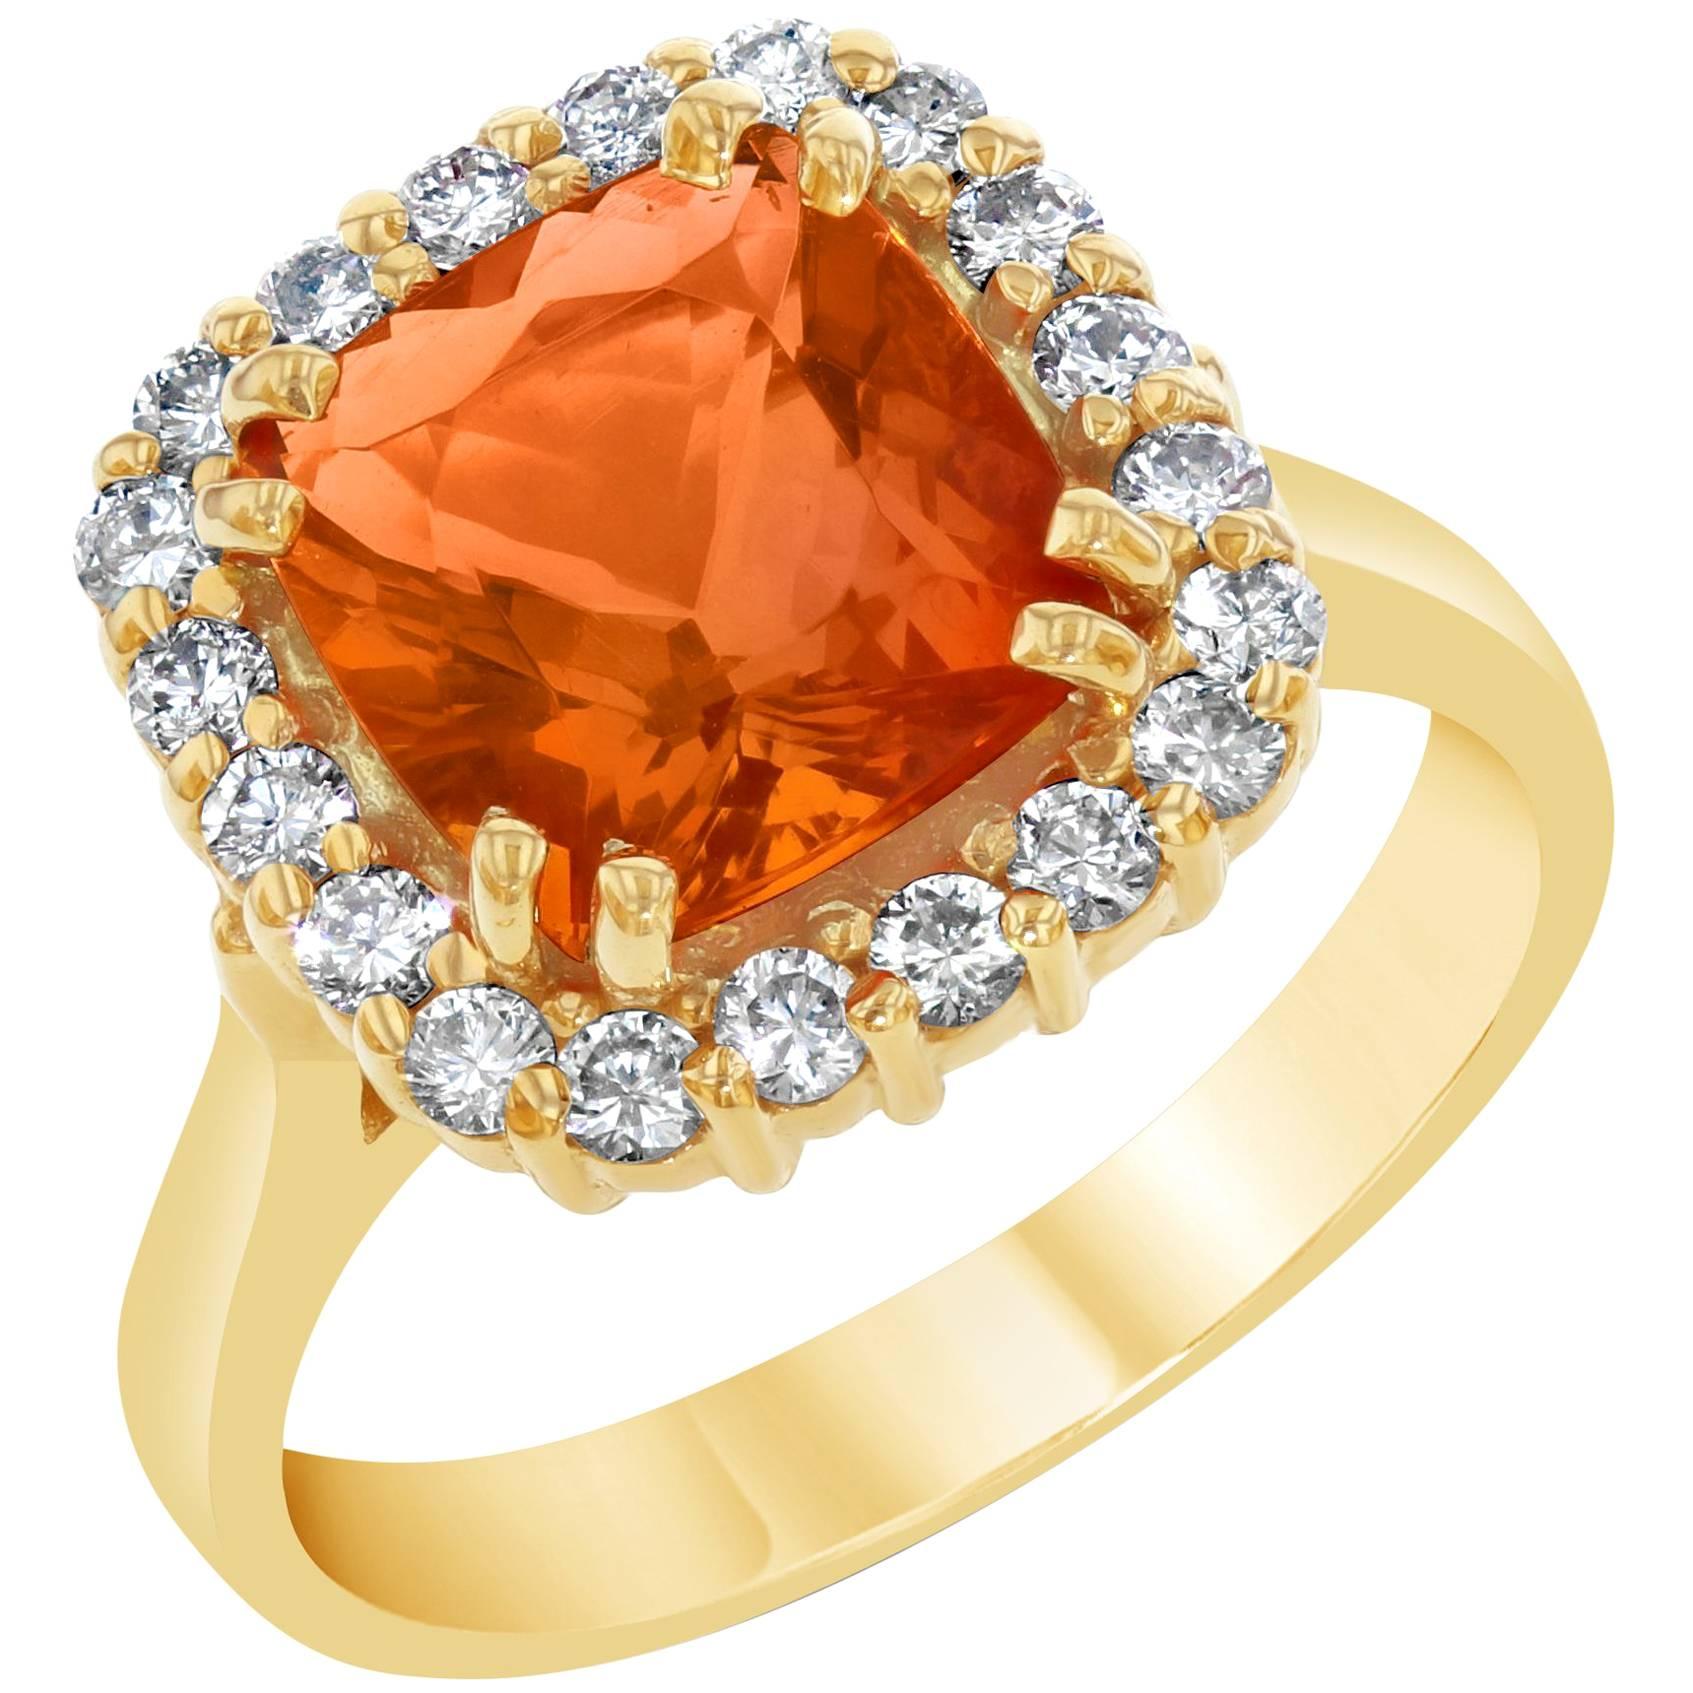 2.48 Carat Fire Opal Diamond 14 Karat Yellow Gold Ring